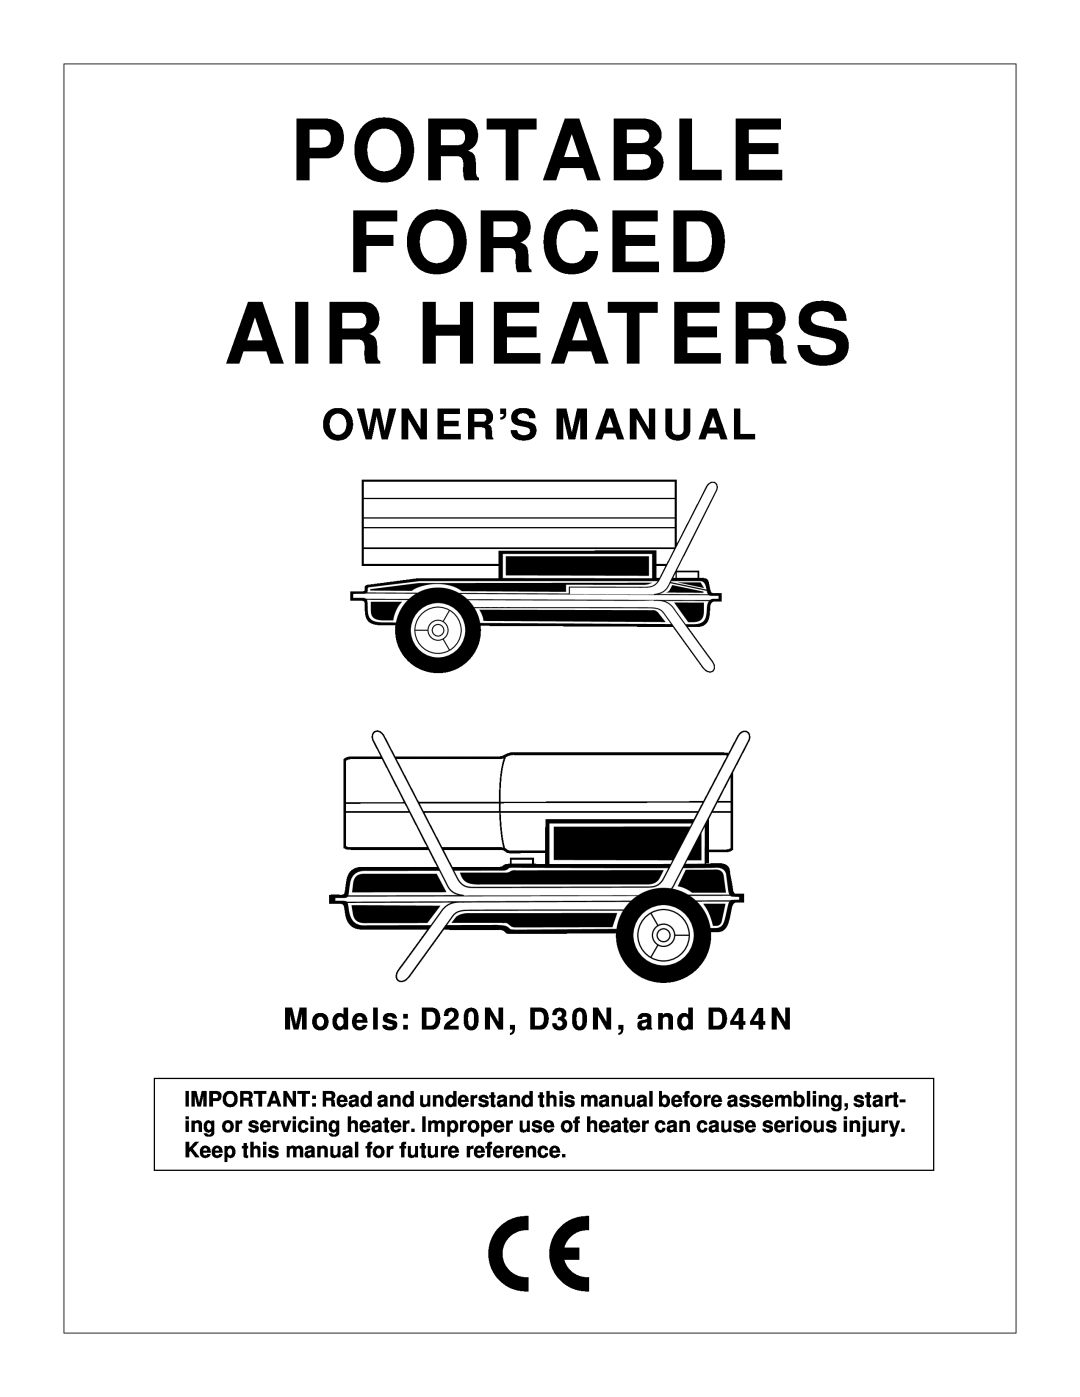 Desa owner manual Portable Forced Air Heaters, Models D20N, D30N, and D44N 